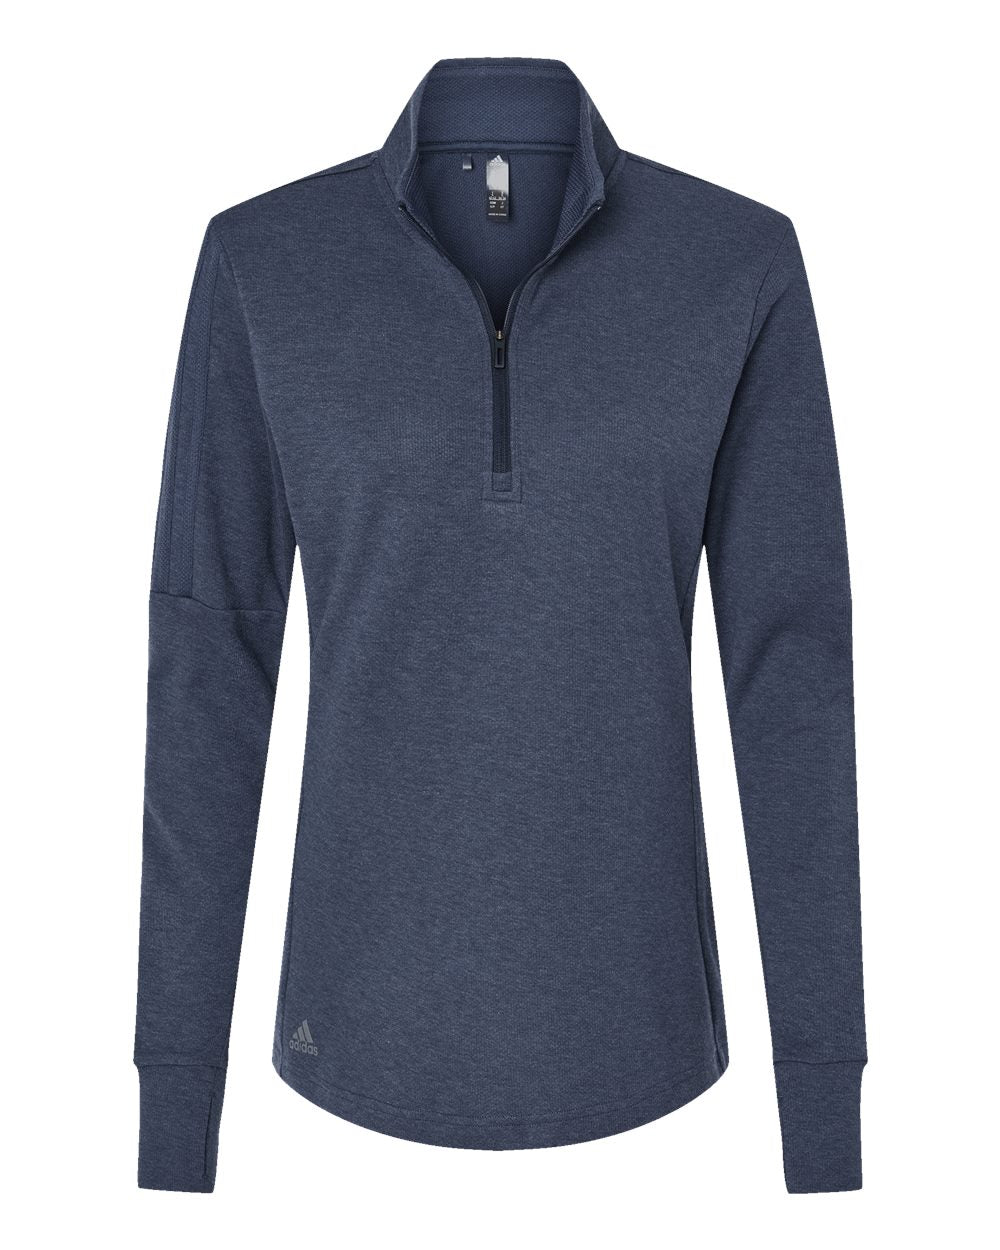 Adidas A555 Women's 3-Stripes Quarter-Zip Sweater #color_Collegiate Navy Melange